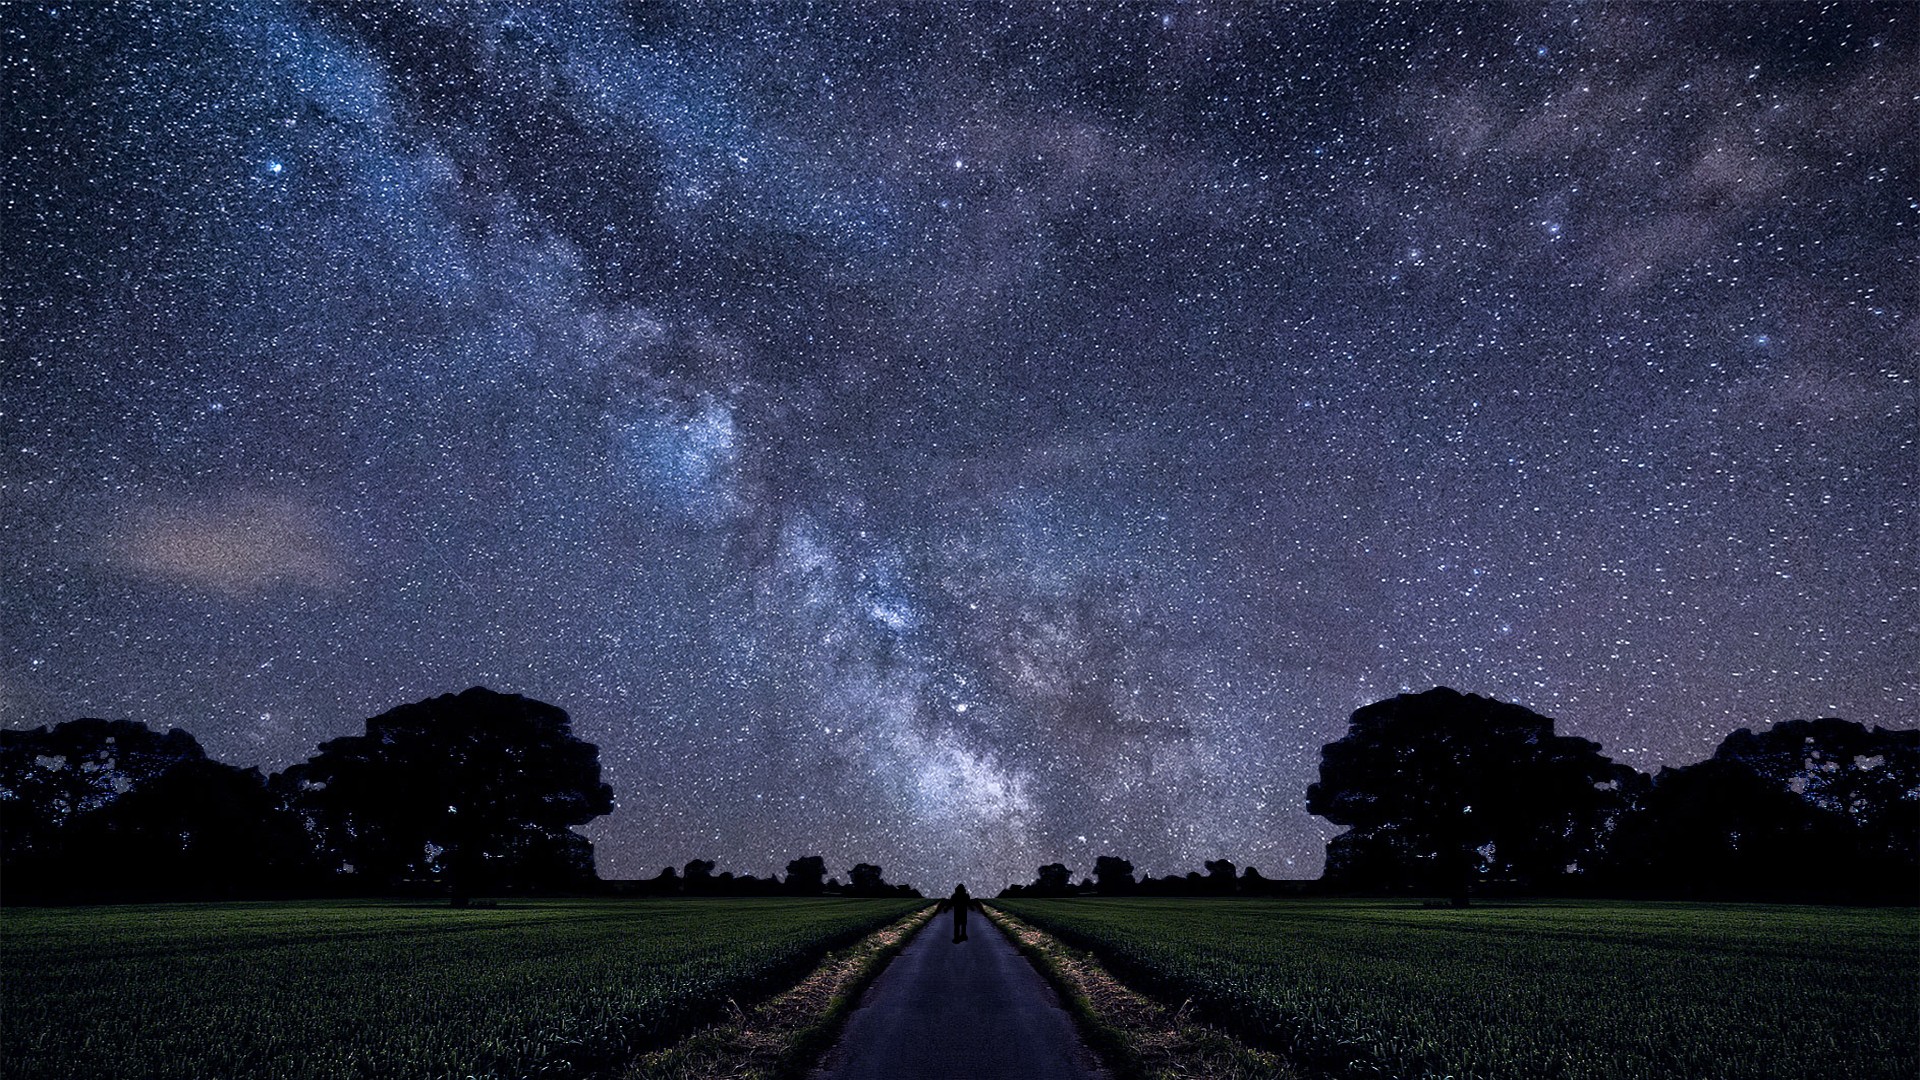 General 1920x1080 stars night road starry night field outdoors sky landscape